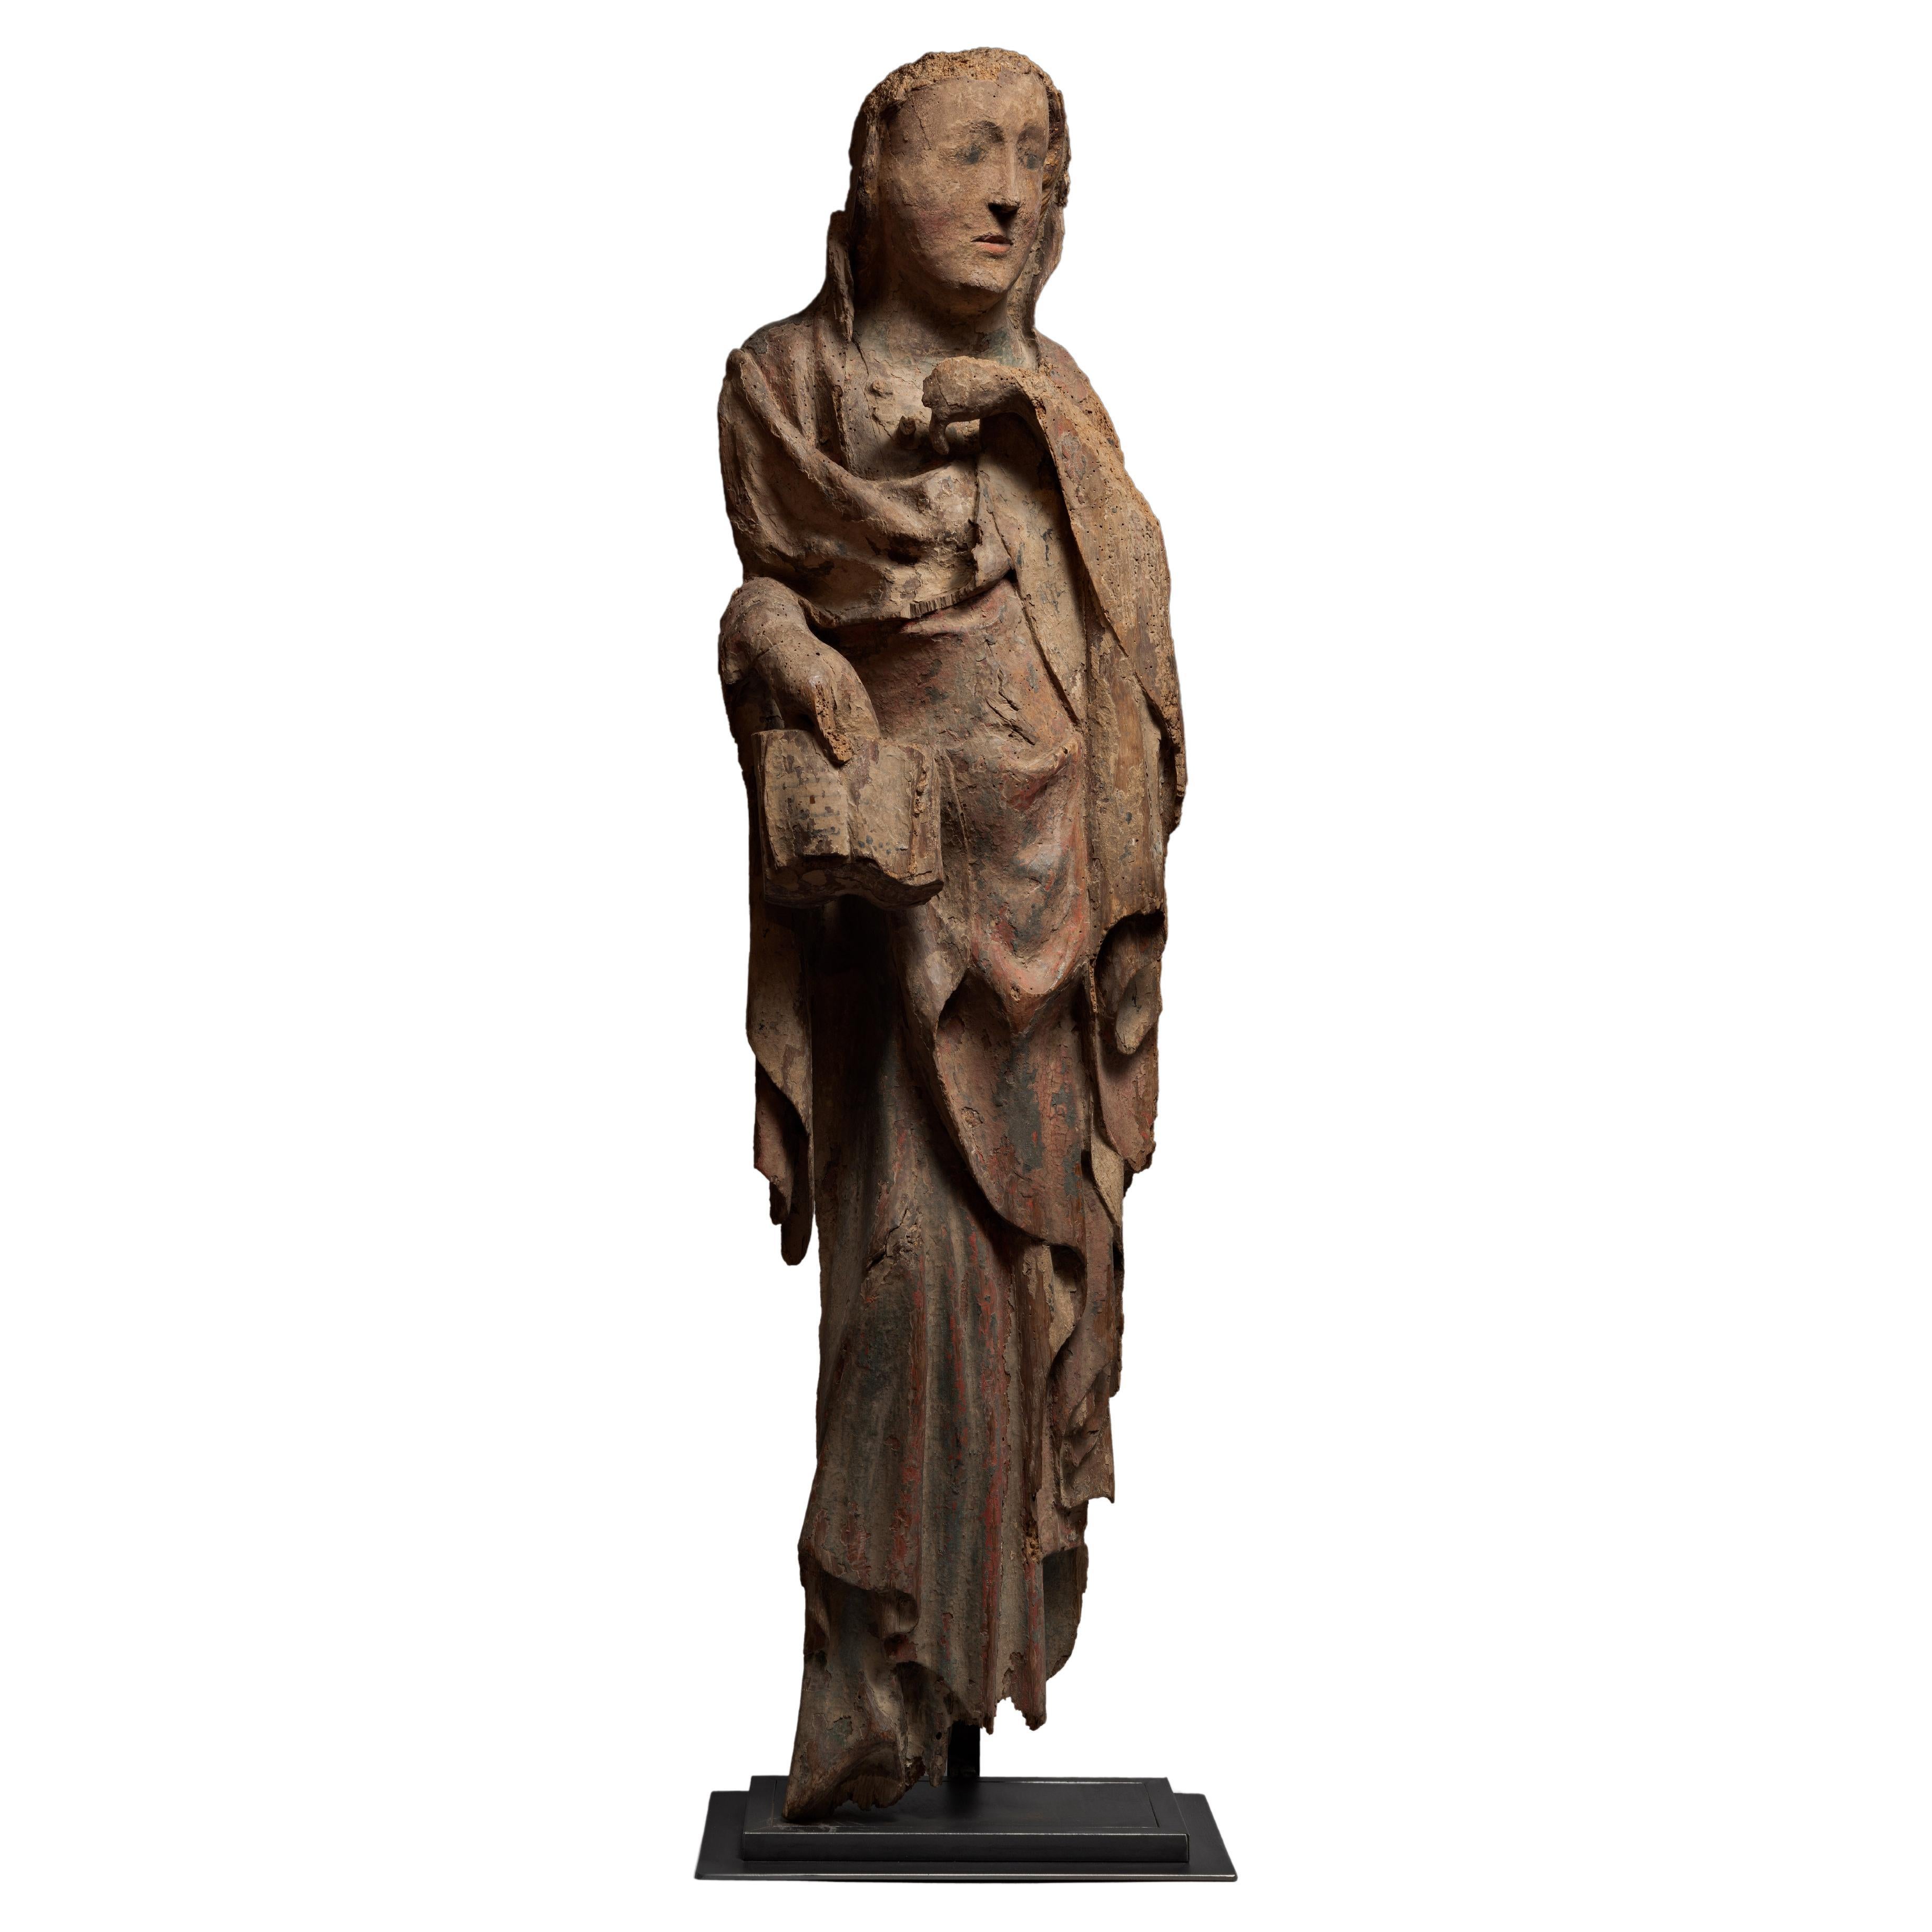 Saint Woman aus polychrom geschnitztem Holz